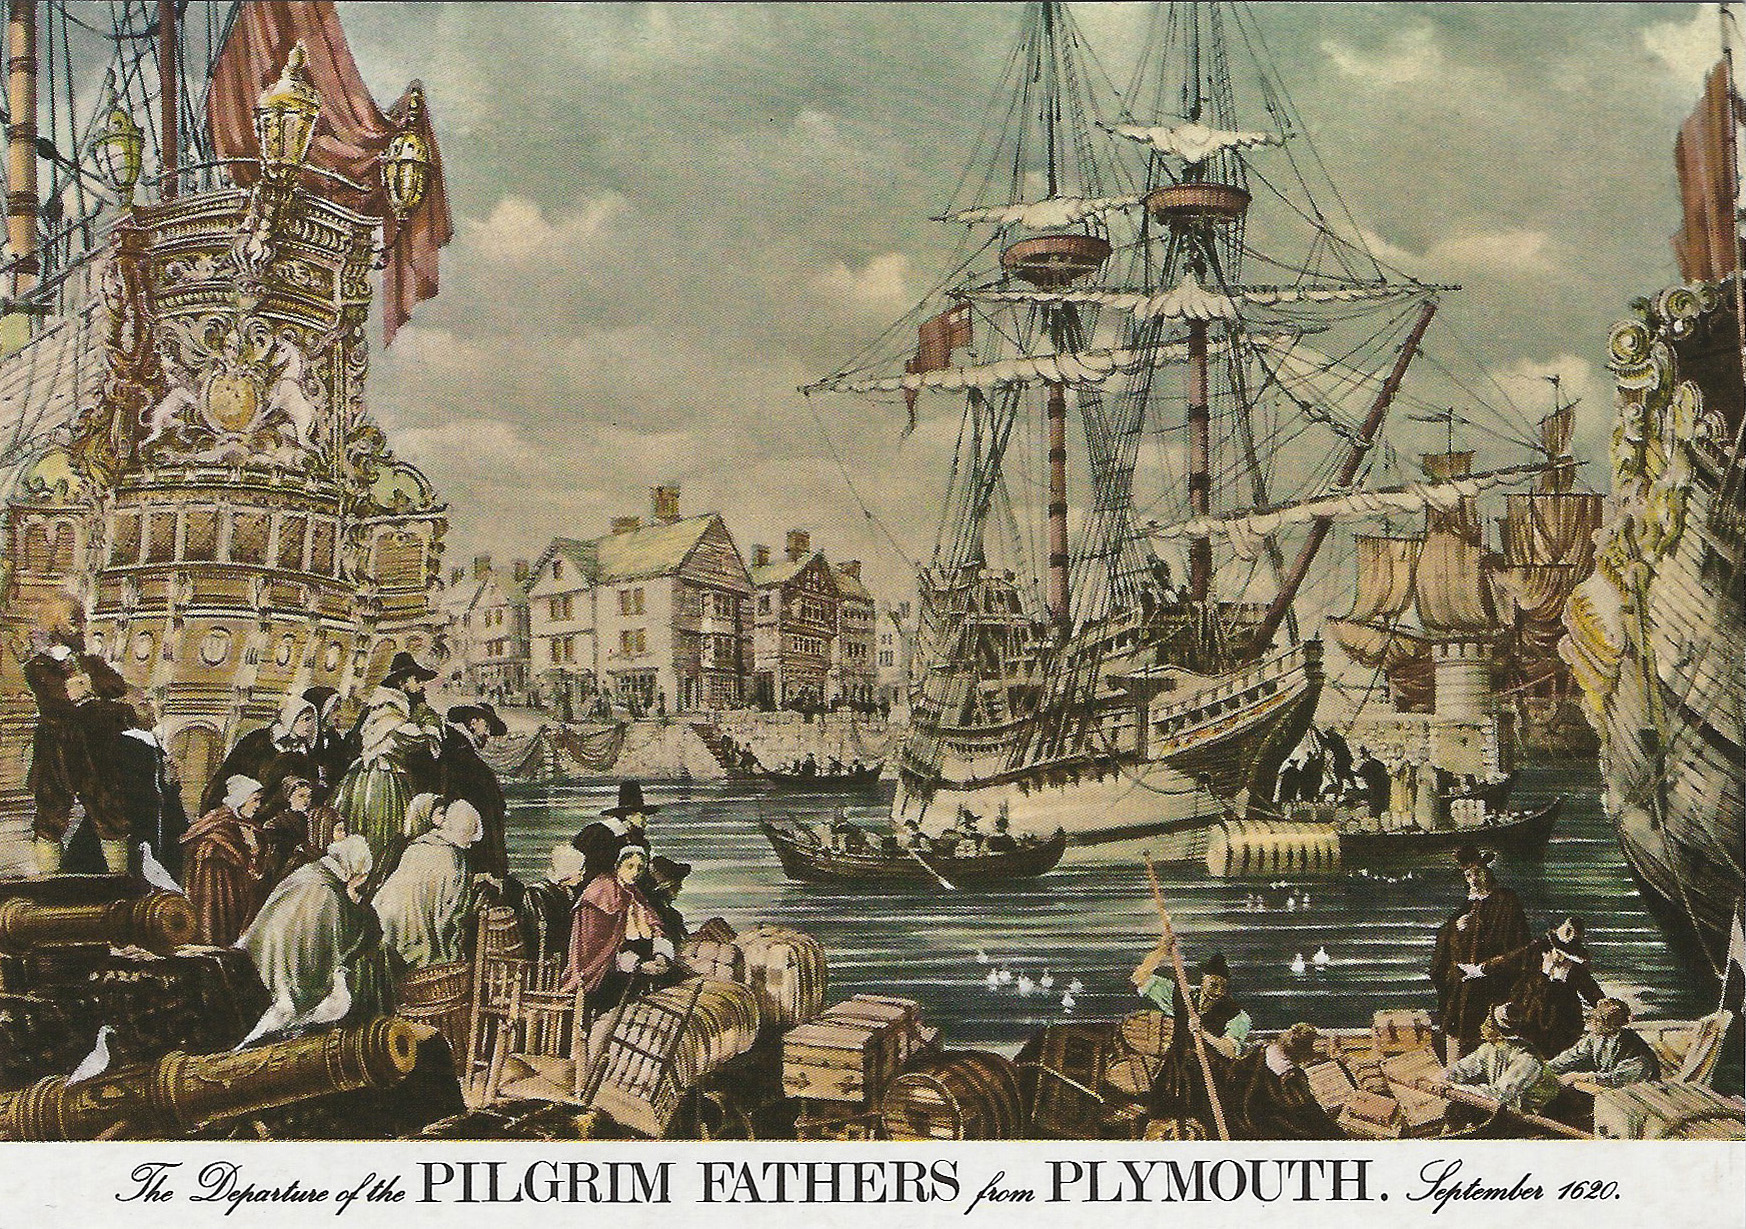 The Pilgrim Fathers - Myth vs Reality with Doug